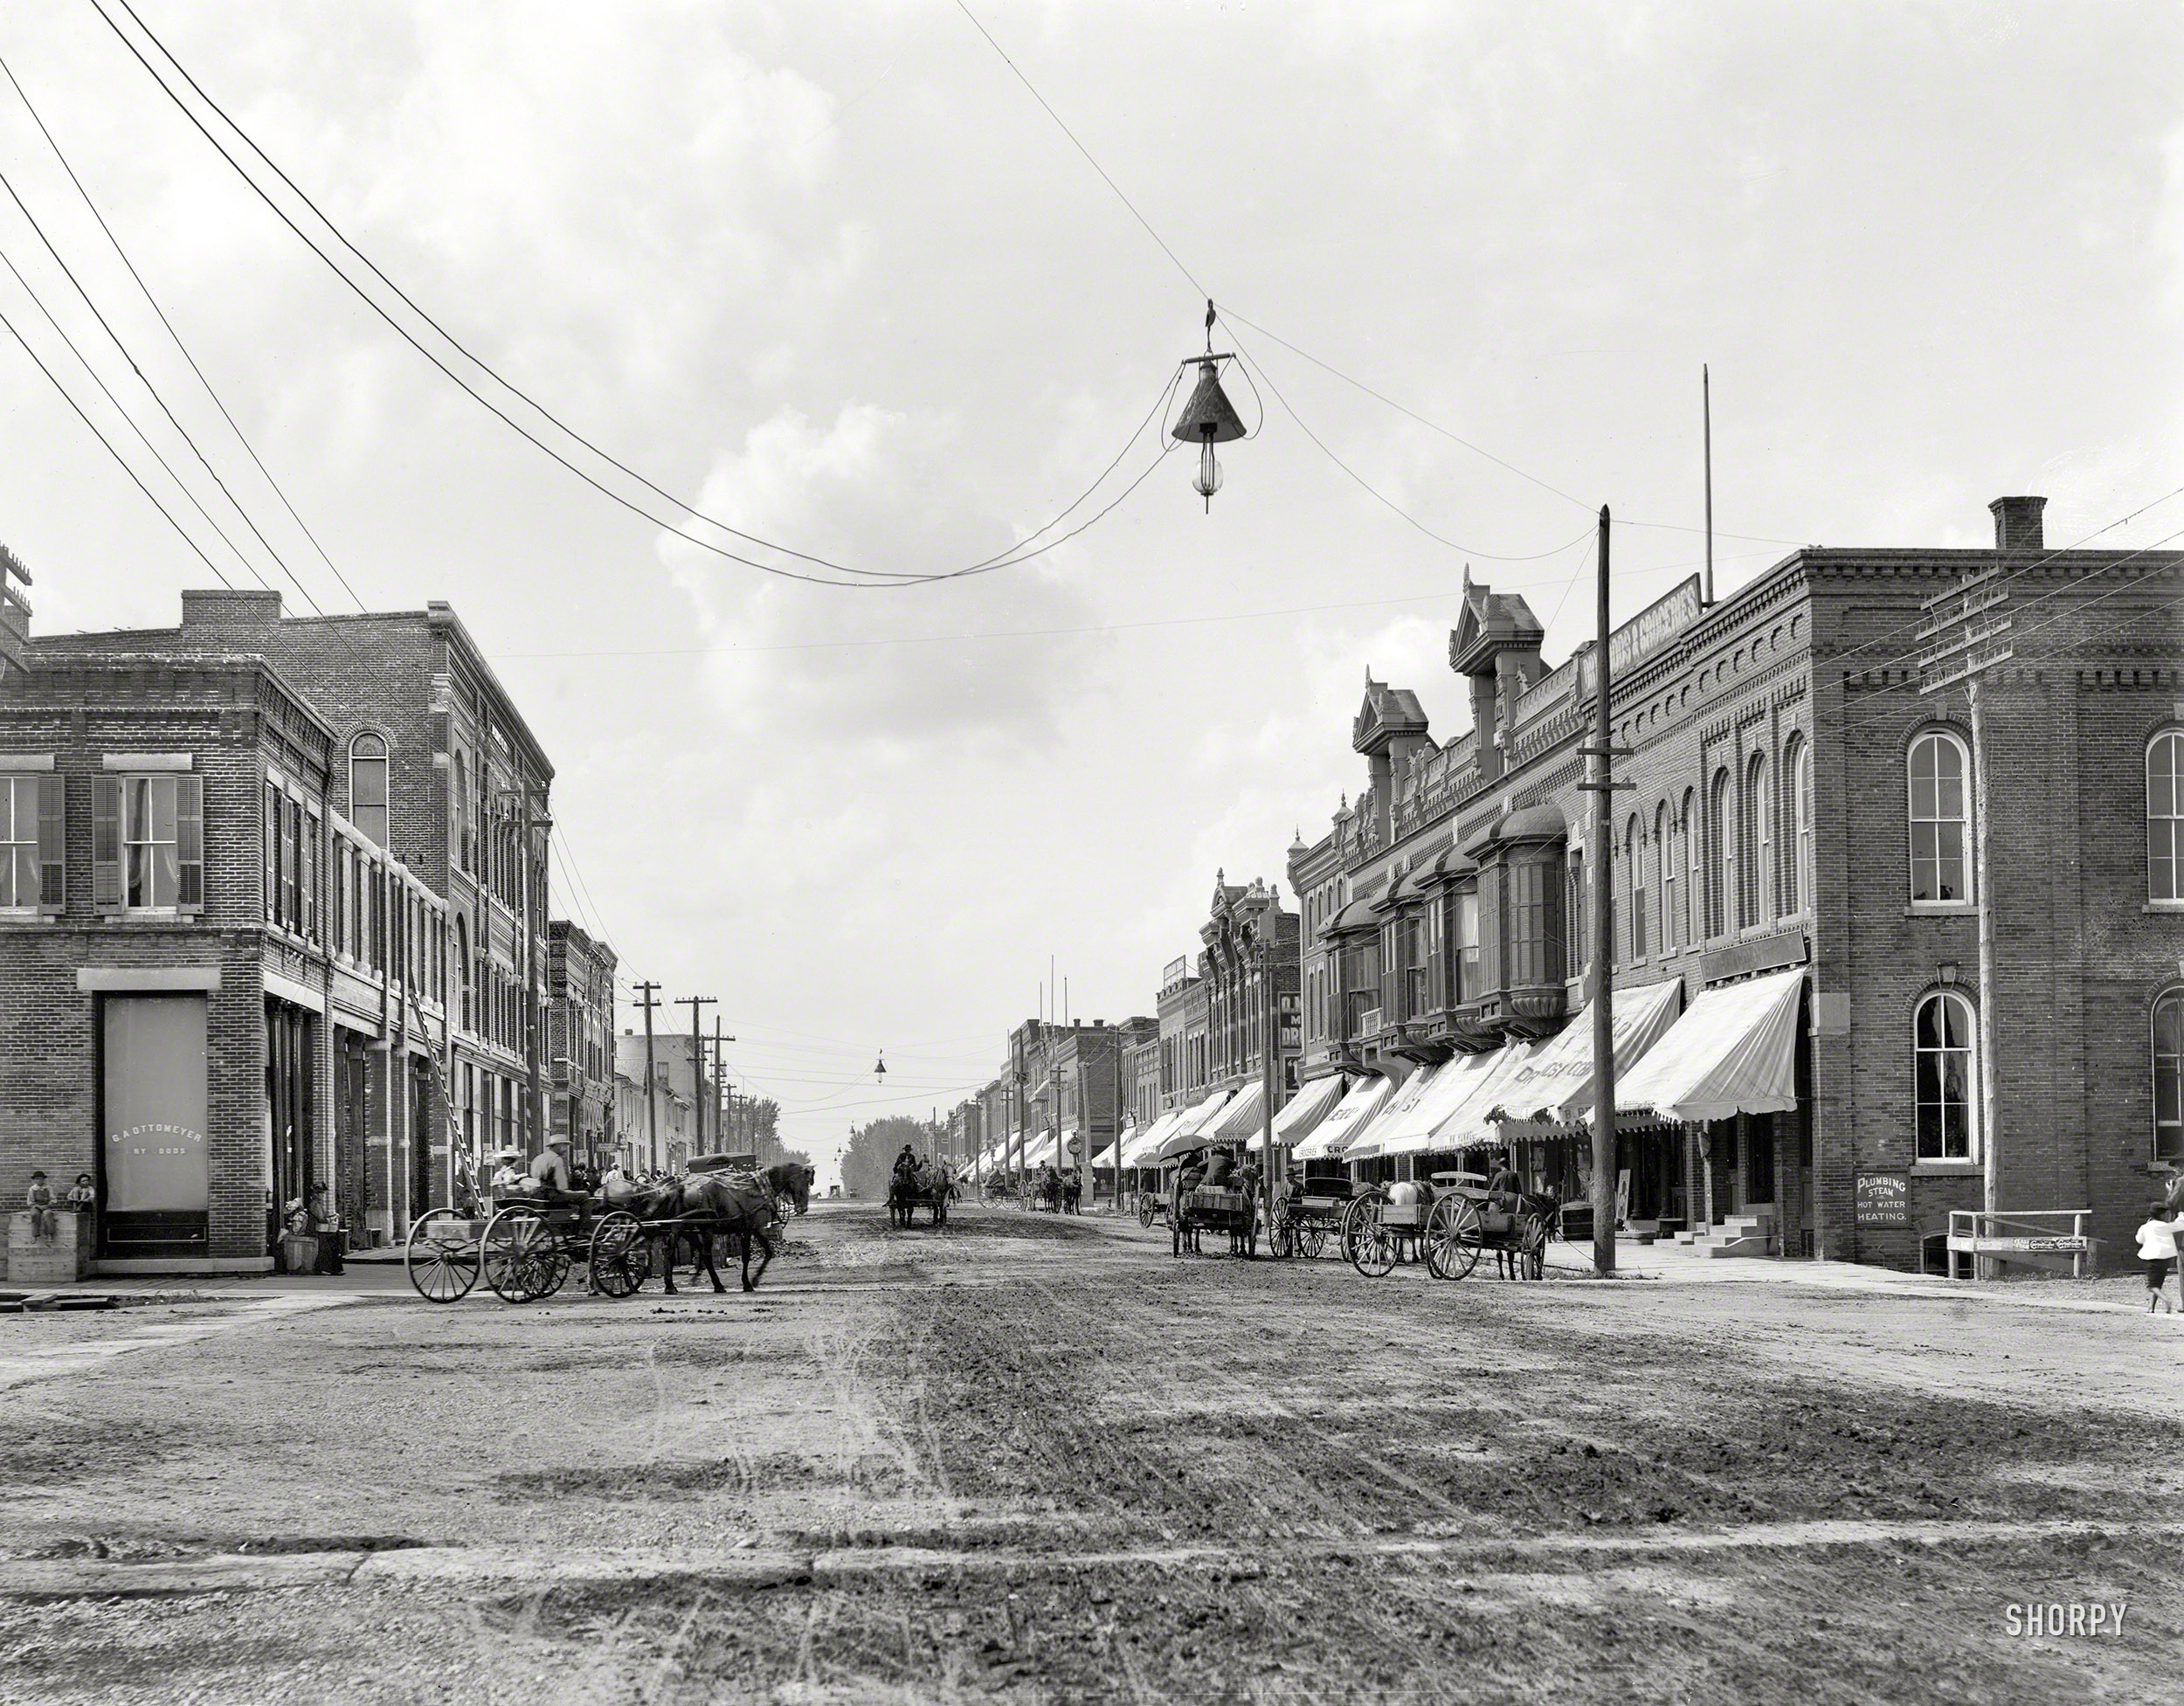 New Ulm, Minnesota, circa 1899. "Main Street." Showcasing the latest in electric illumination. 8x10 inch glass negative, Detroit Photographic Co. View full size.